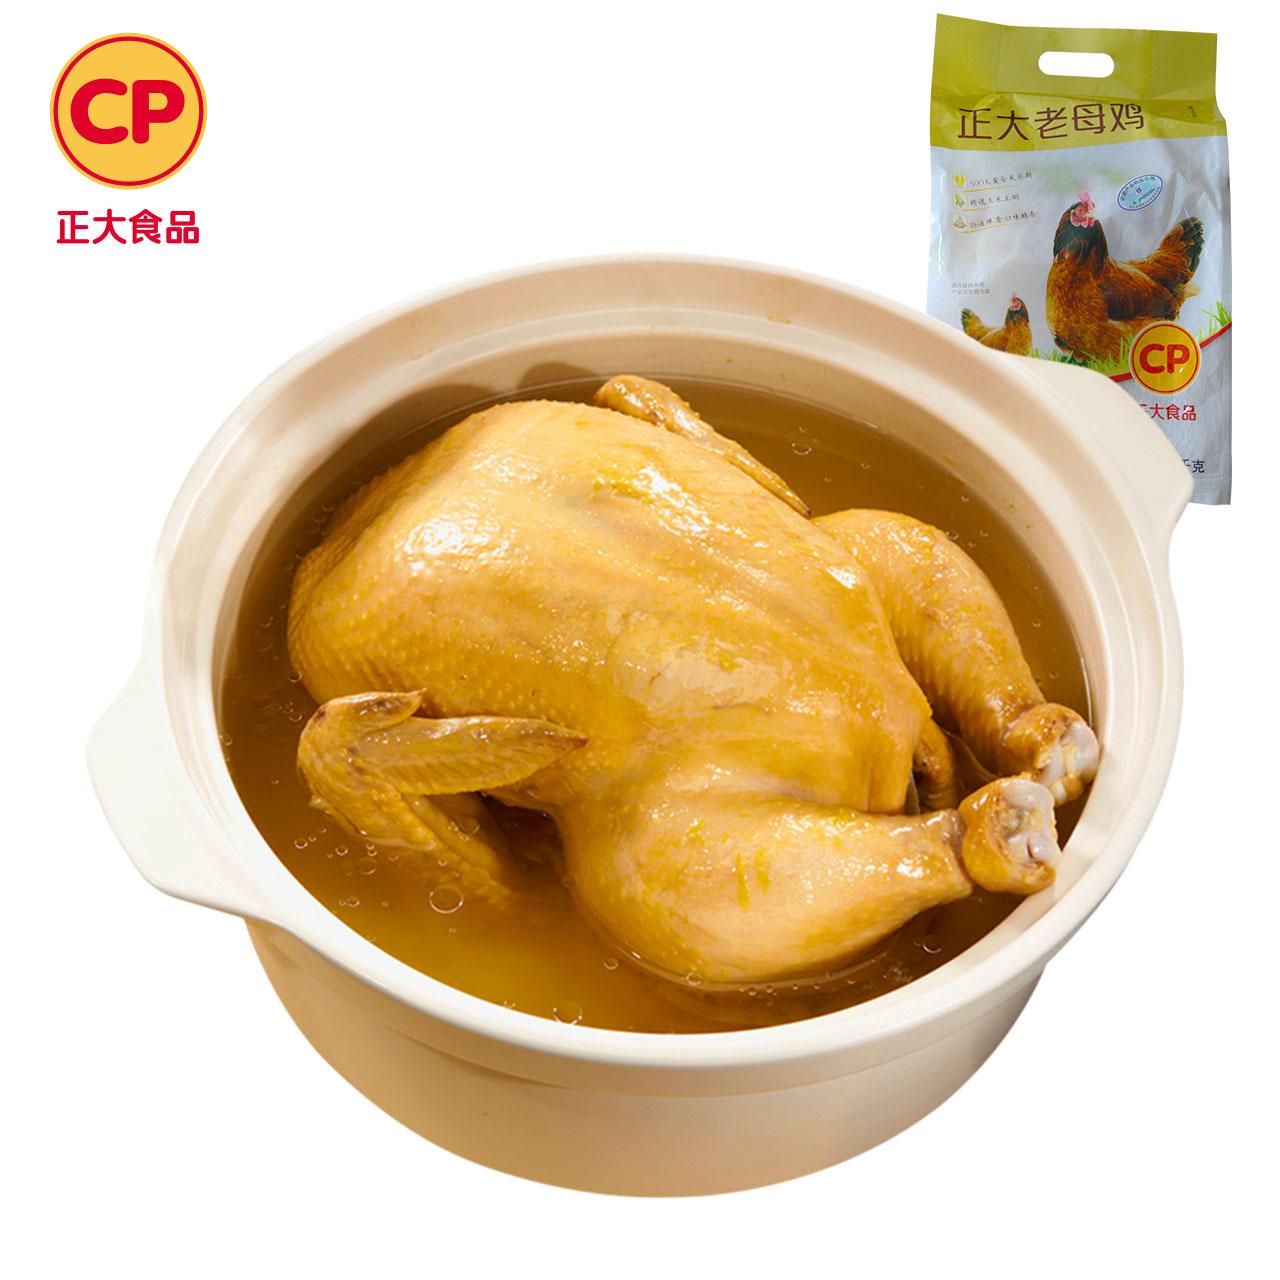 CP 正大食品 老母鸡 1.4kg *6件